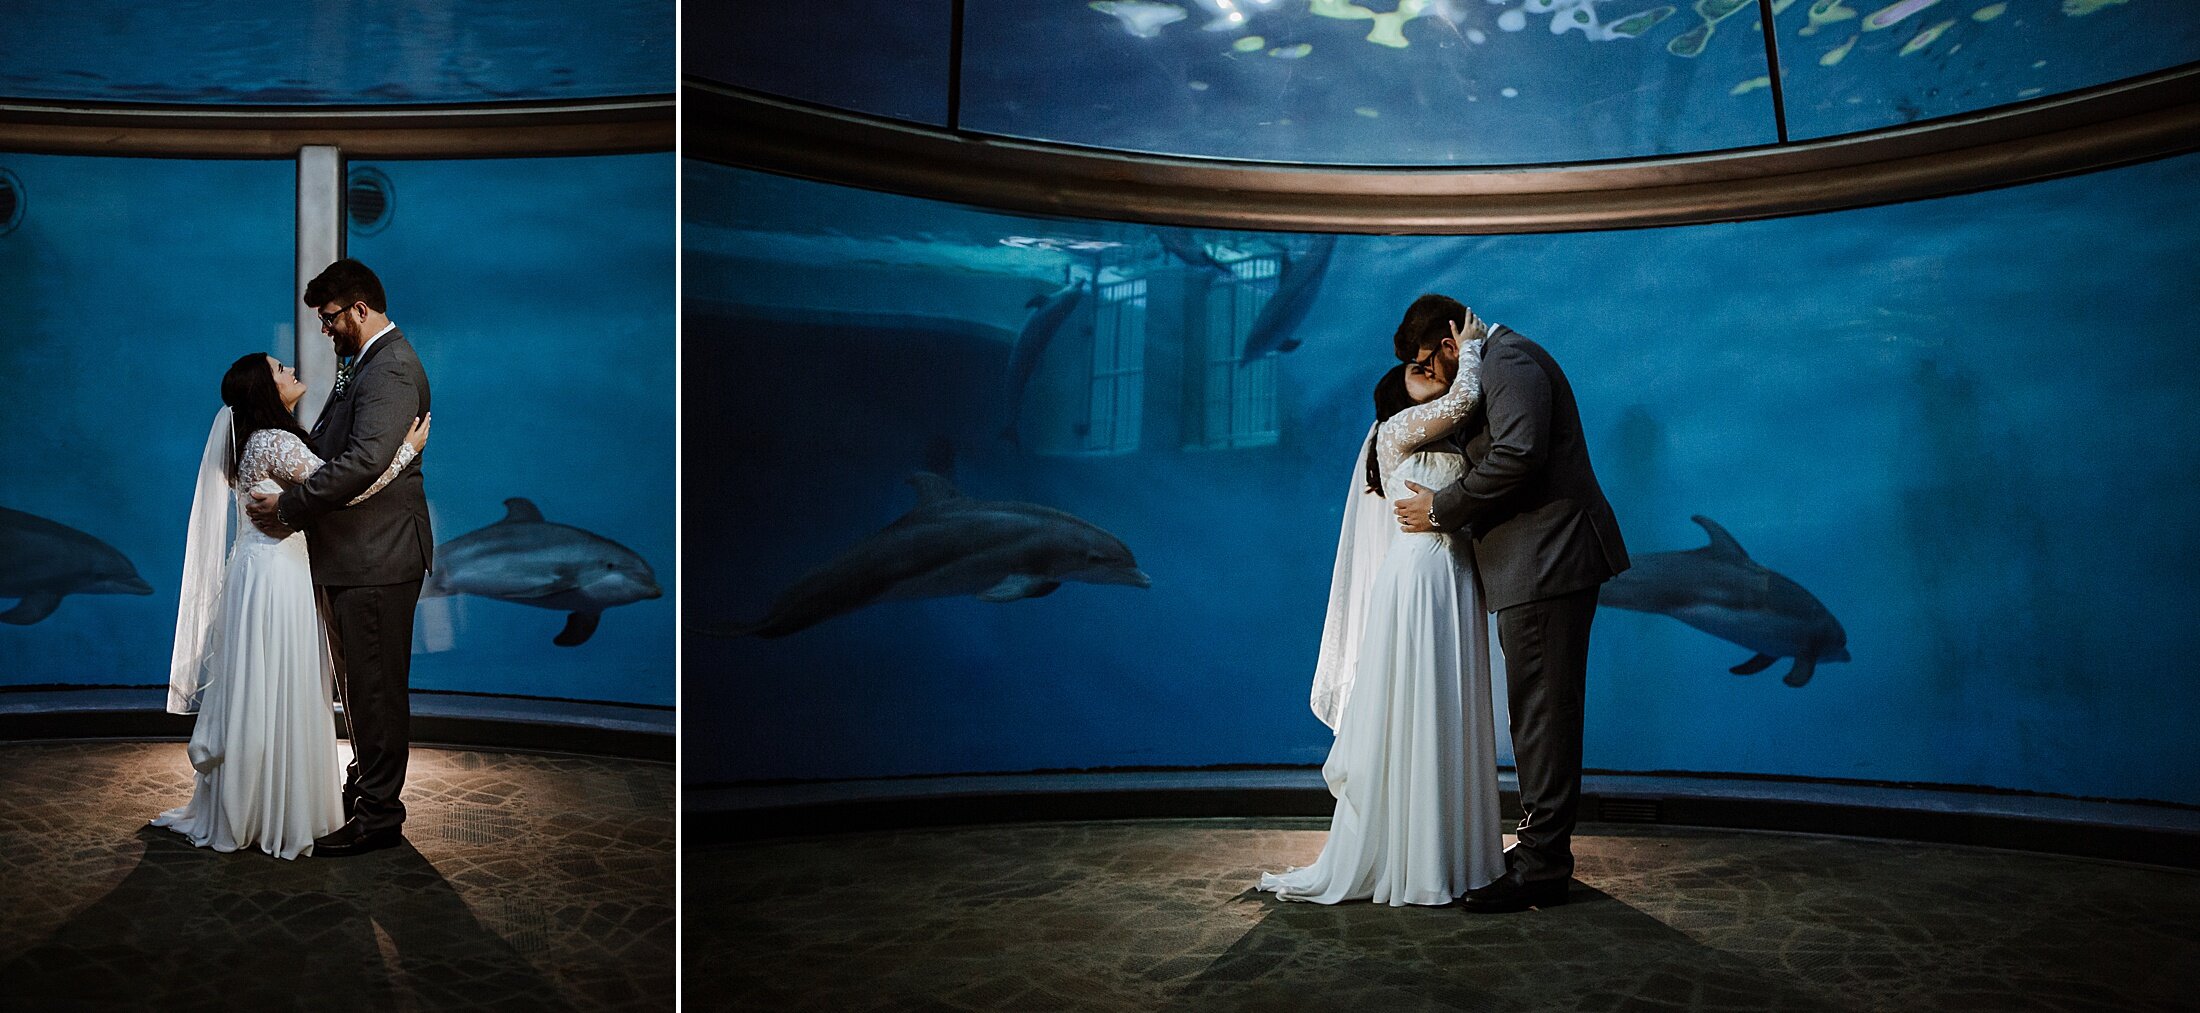 c-m_Indianapolis-Zoo-Wedding_intimate-wedding_milwaukee-wedding-photography_LILLER-PHOTO_0031.jpg